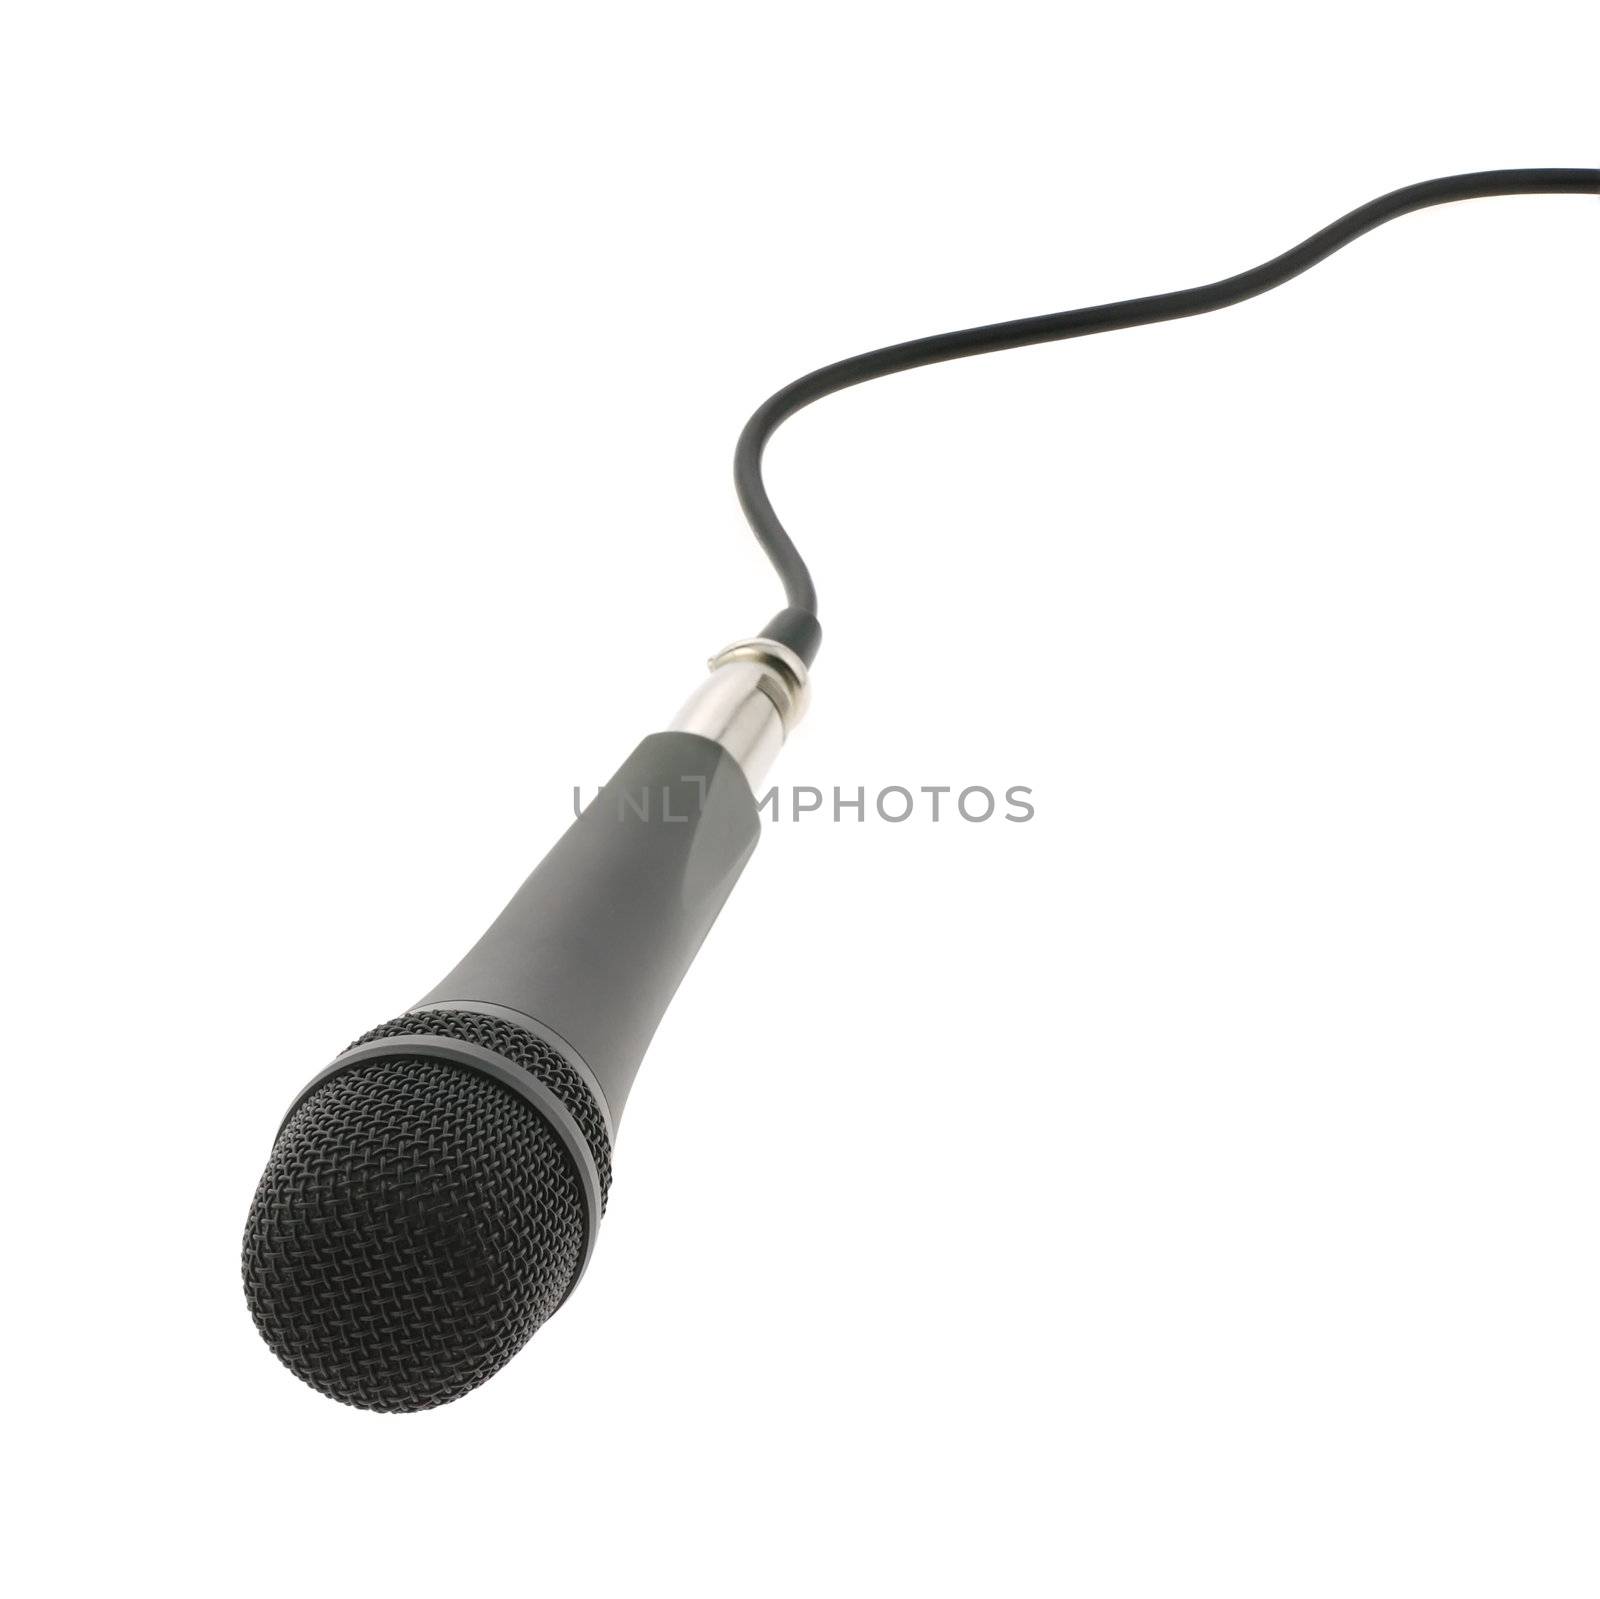 Microphone by galdzer